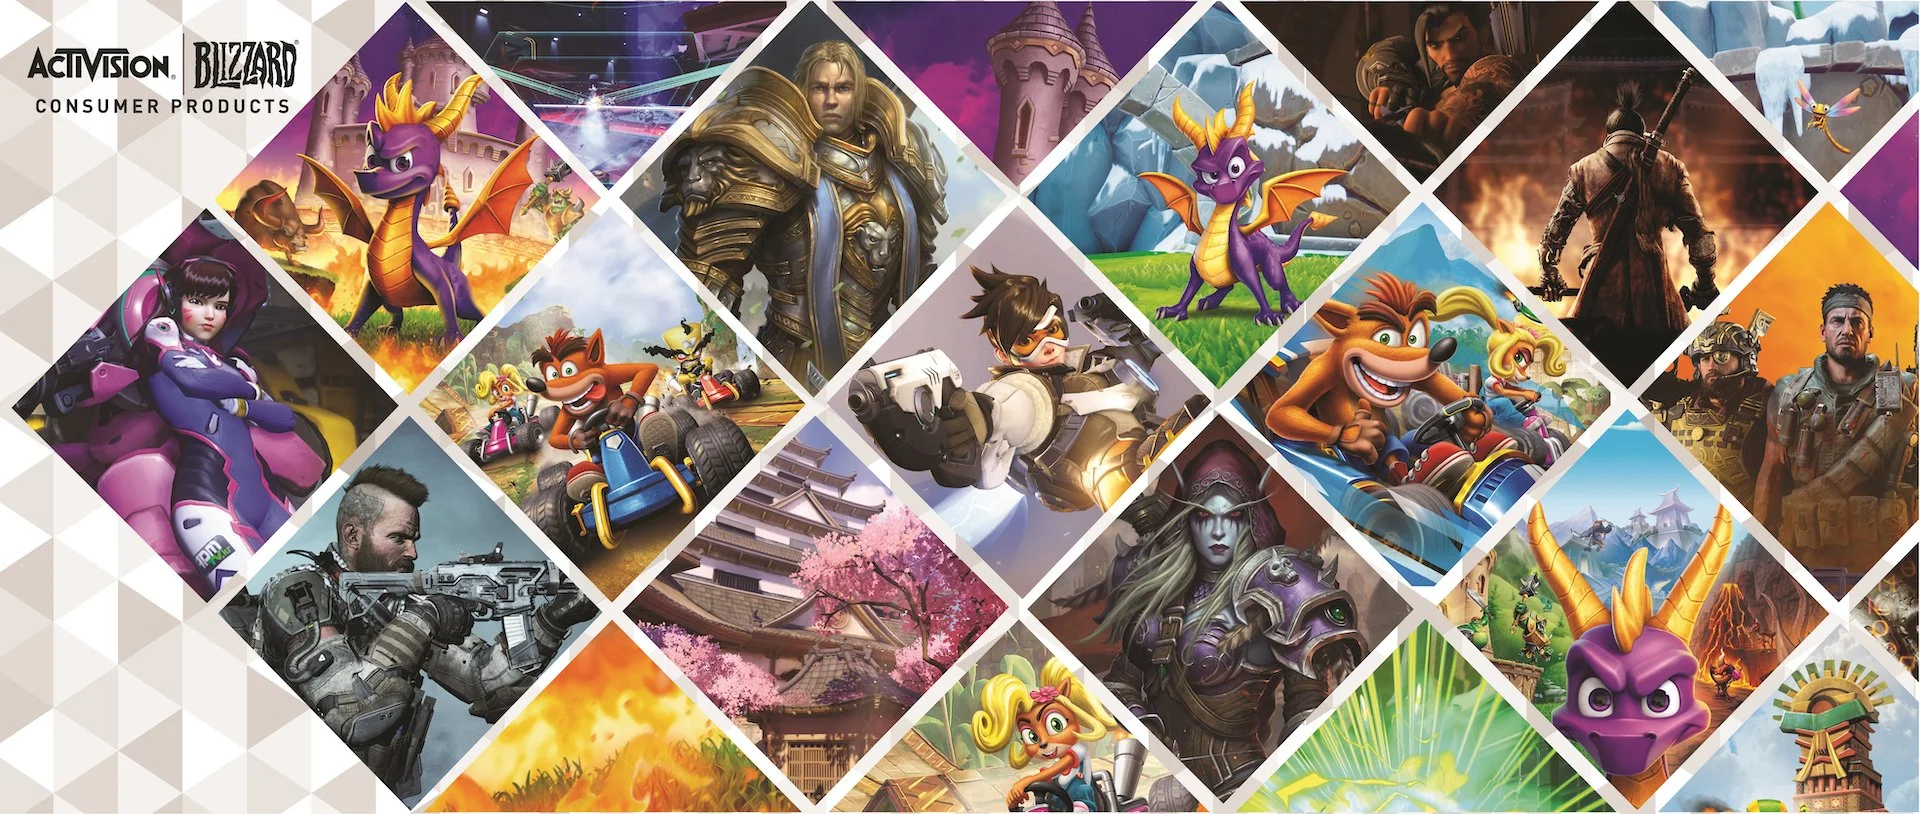 Call of Duty и Warcraft скоро будут принадлежать Microsoft: главное о покупке Activision Blizzard - фото 3